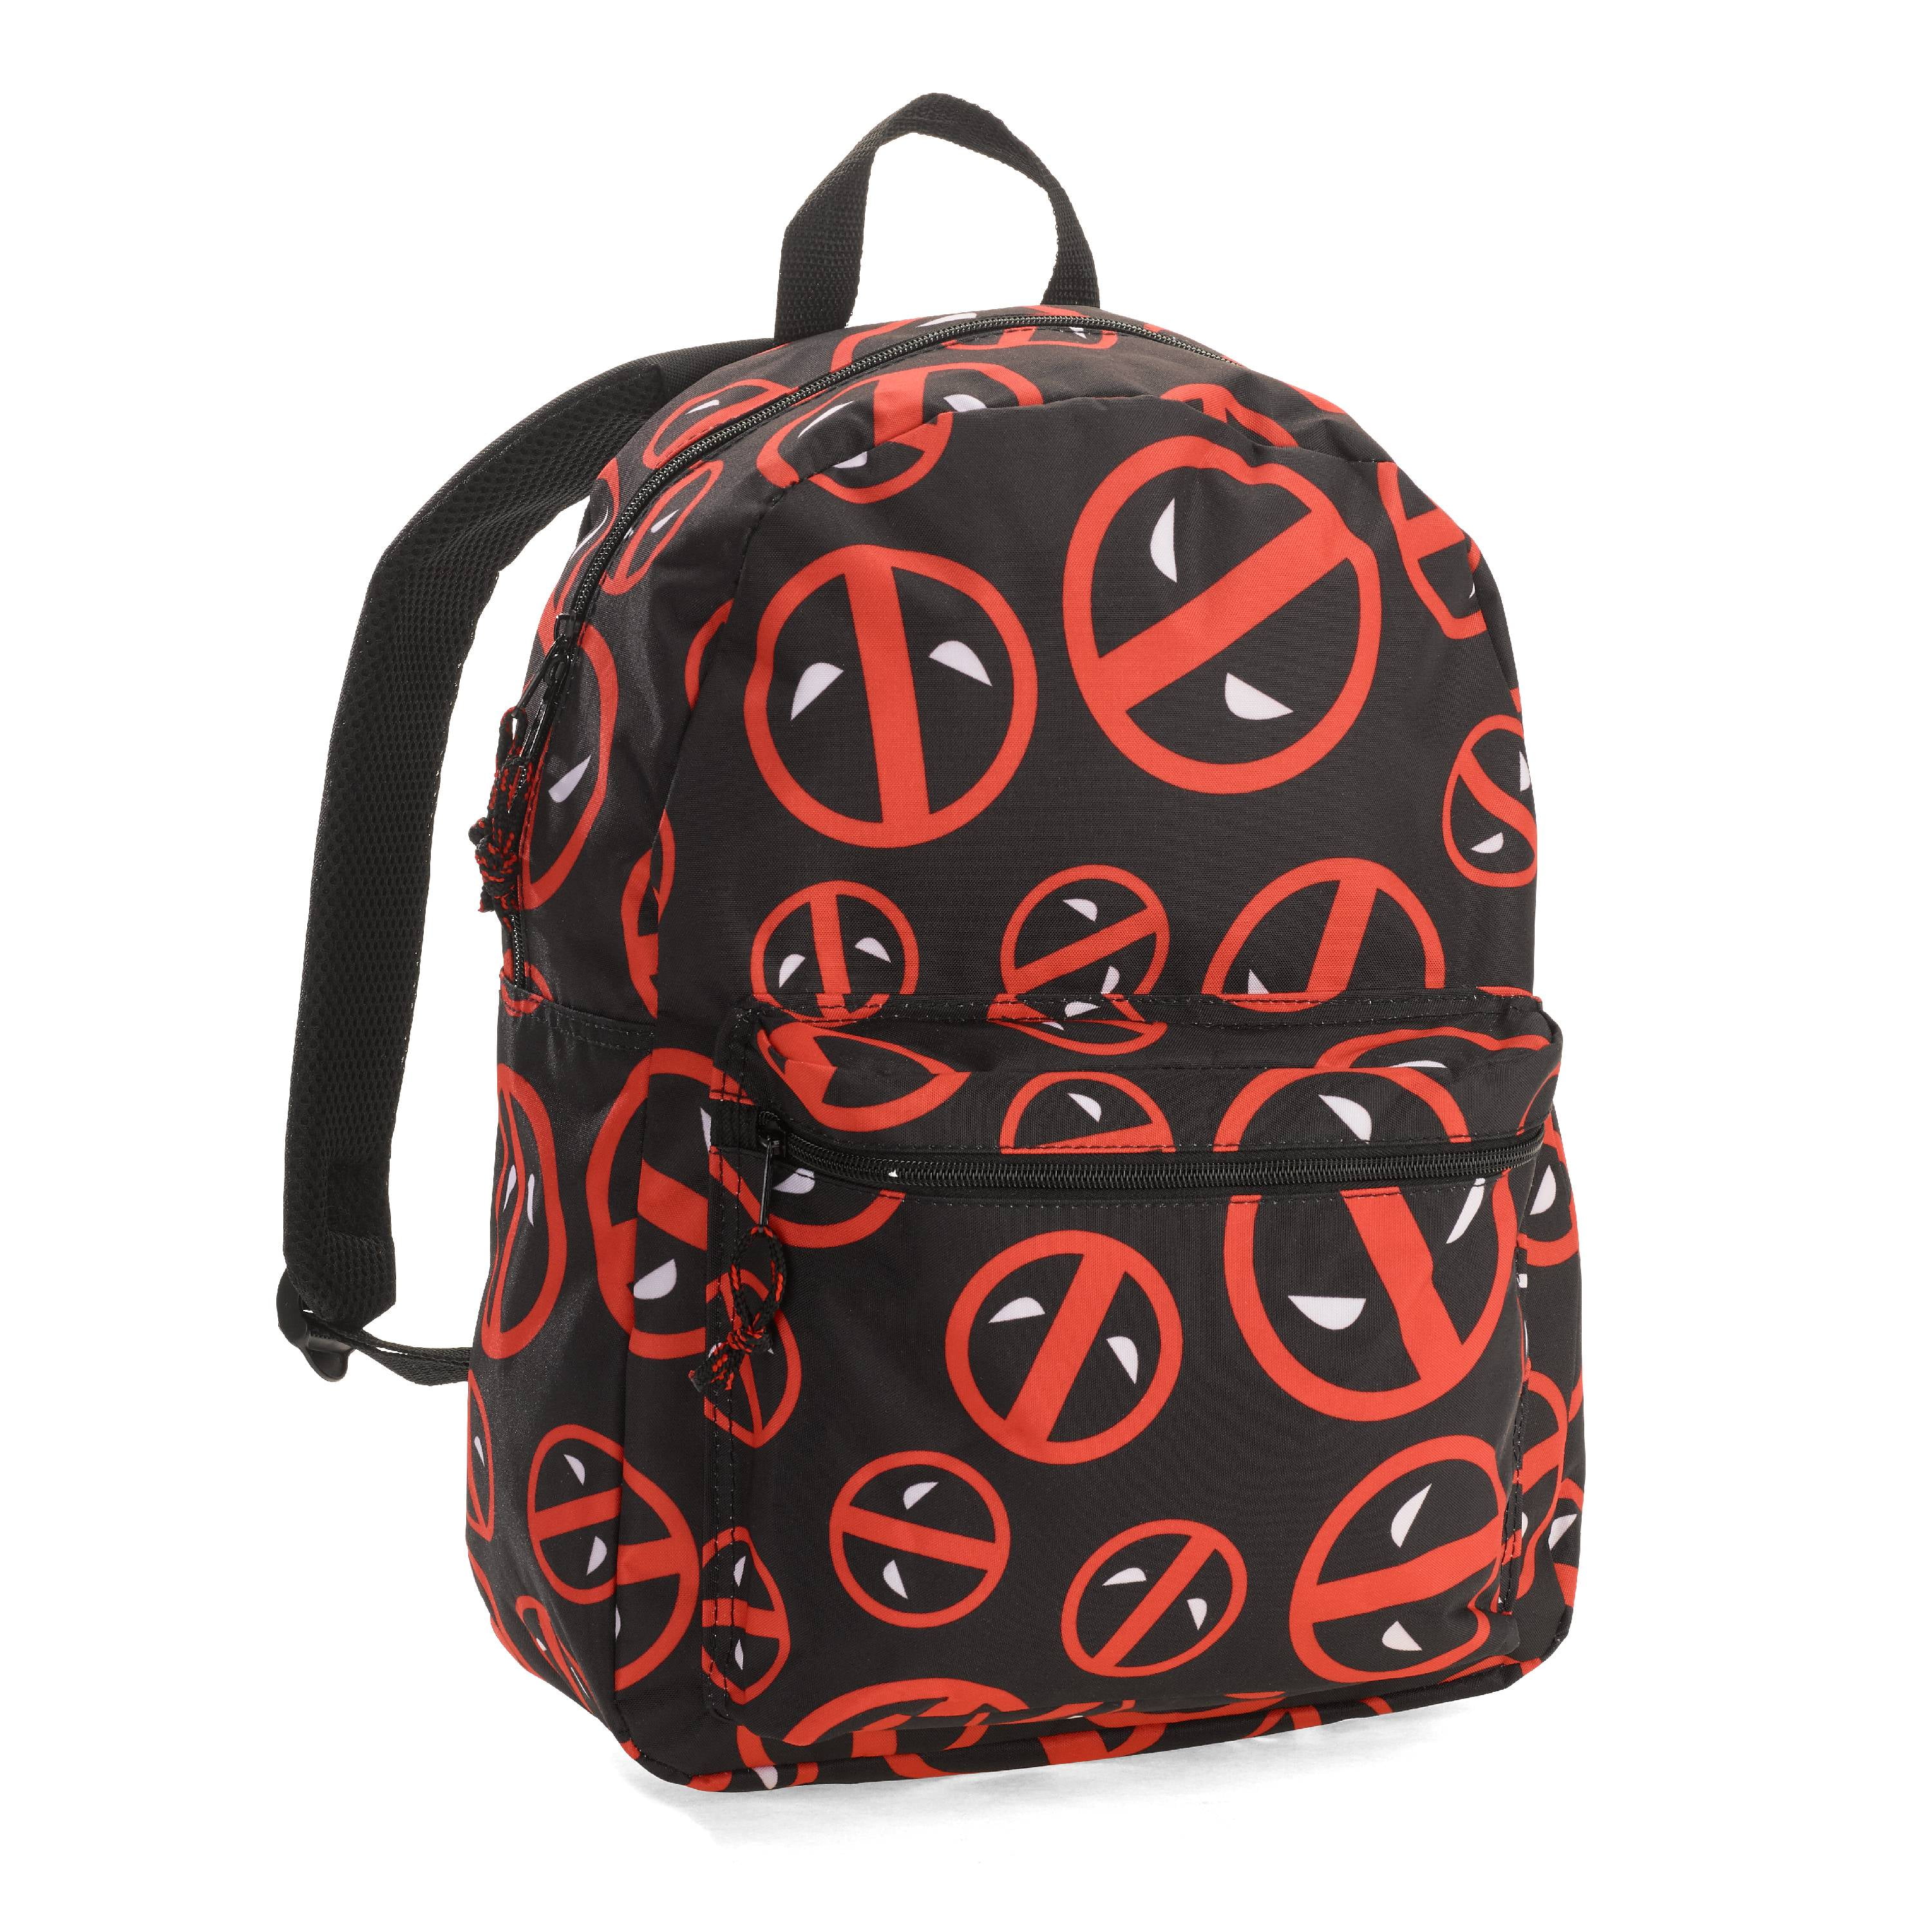 Marvel Deadpool Red and Black Backpack for Boys School Bag